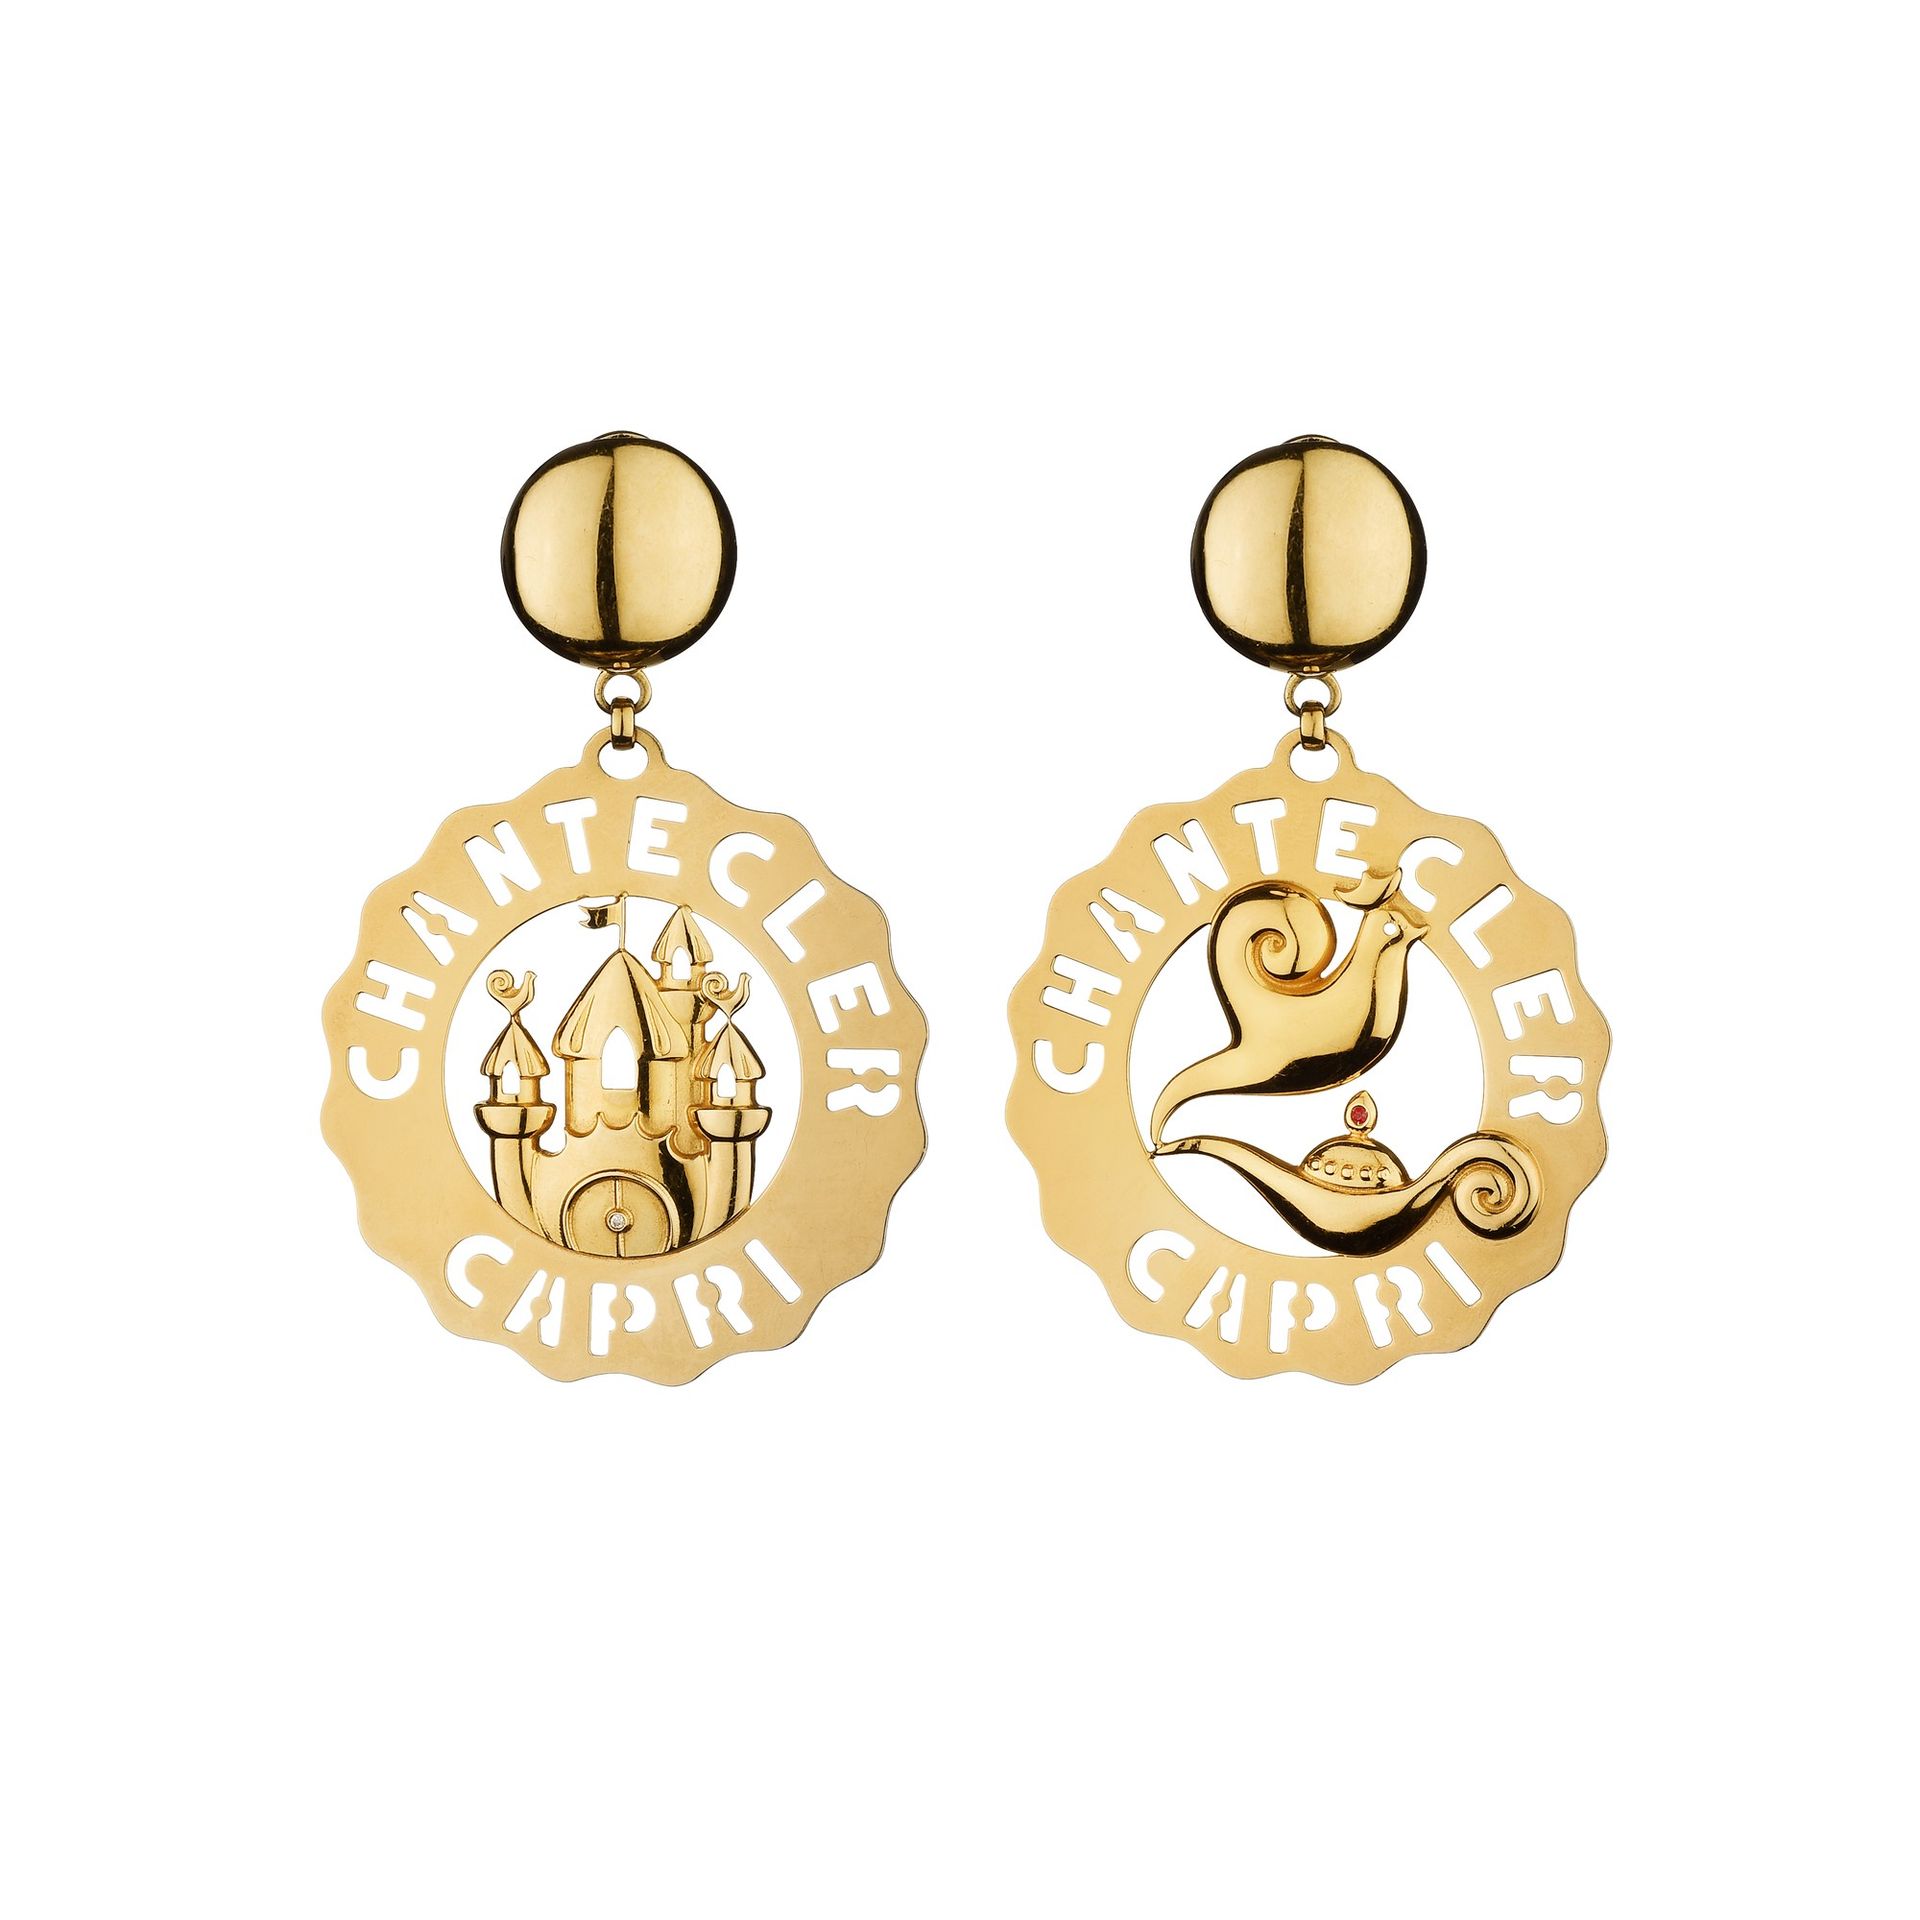 CHANTECLER Logo drop earrings by Chantecler in 18kt yellow gold.

Dimensions 7,0&hellip;